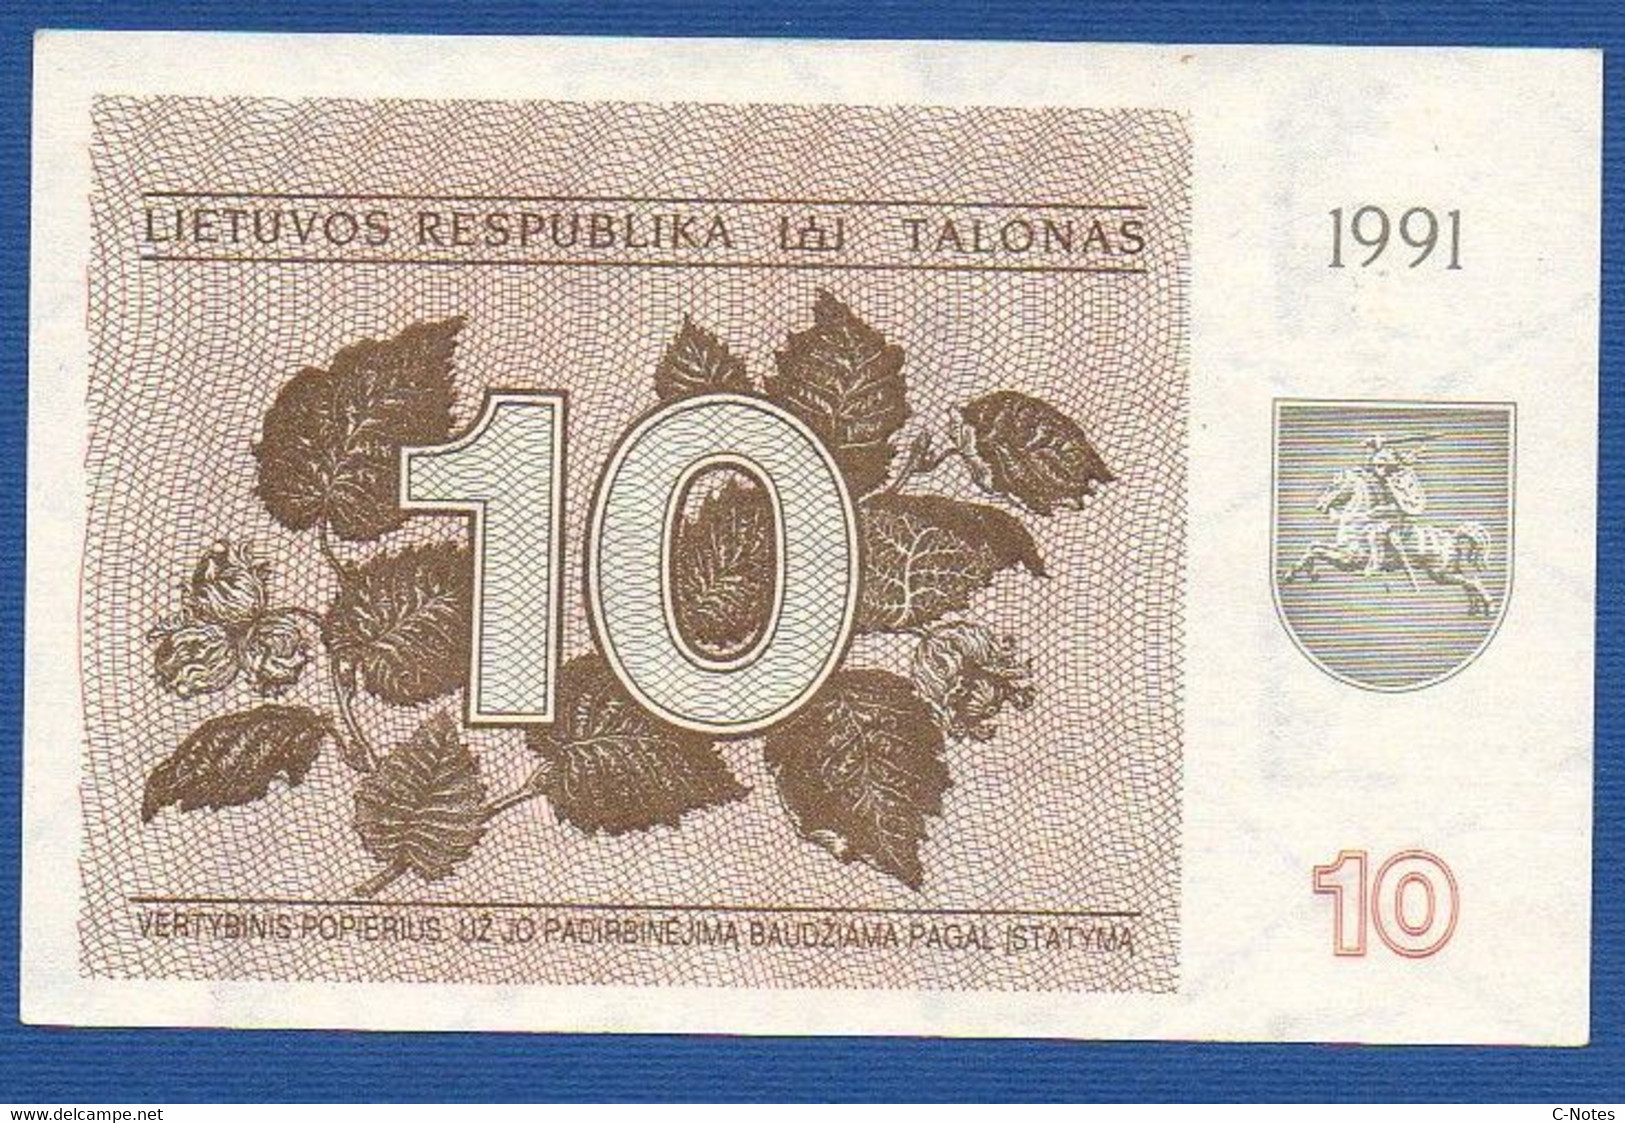 LITHUANIA - P.35b – 10 Talonas 1991 UNC-, Serie CV 462273 - Lithuania